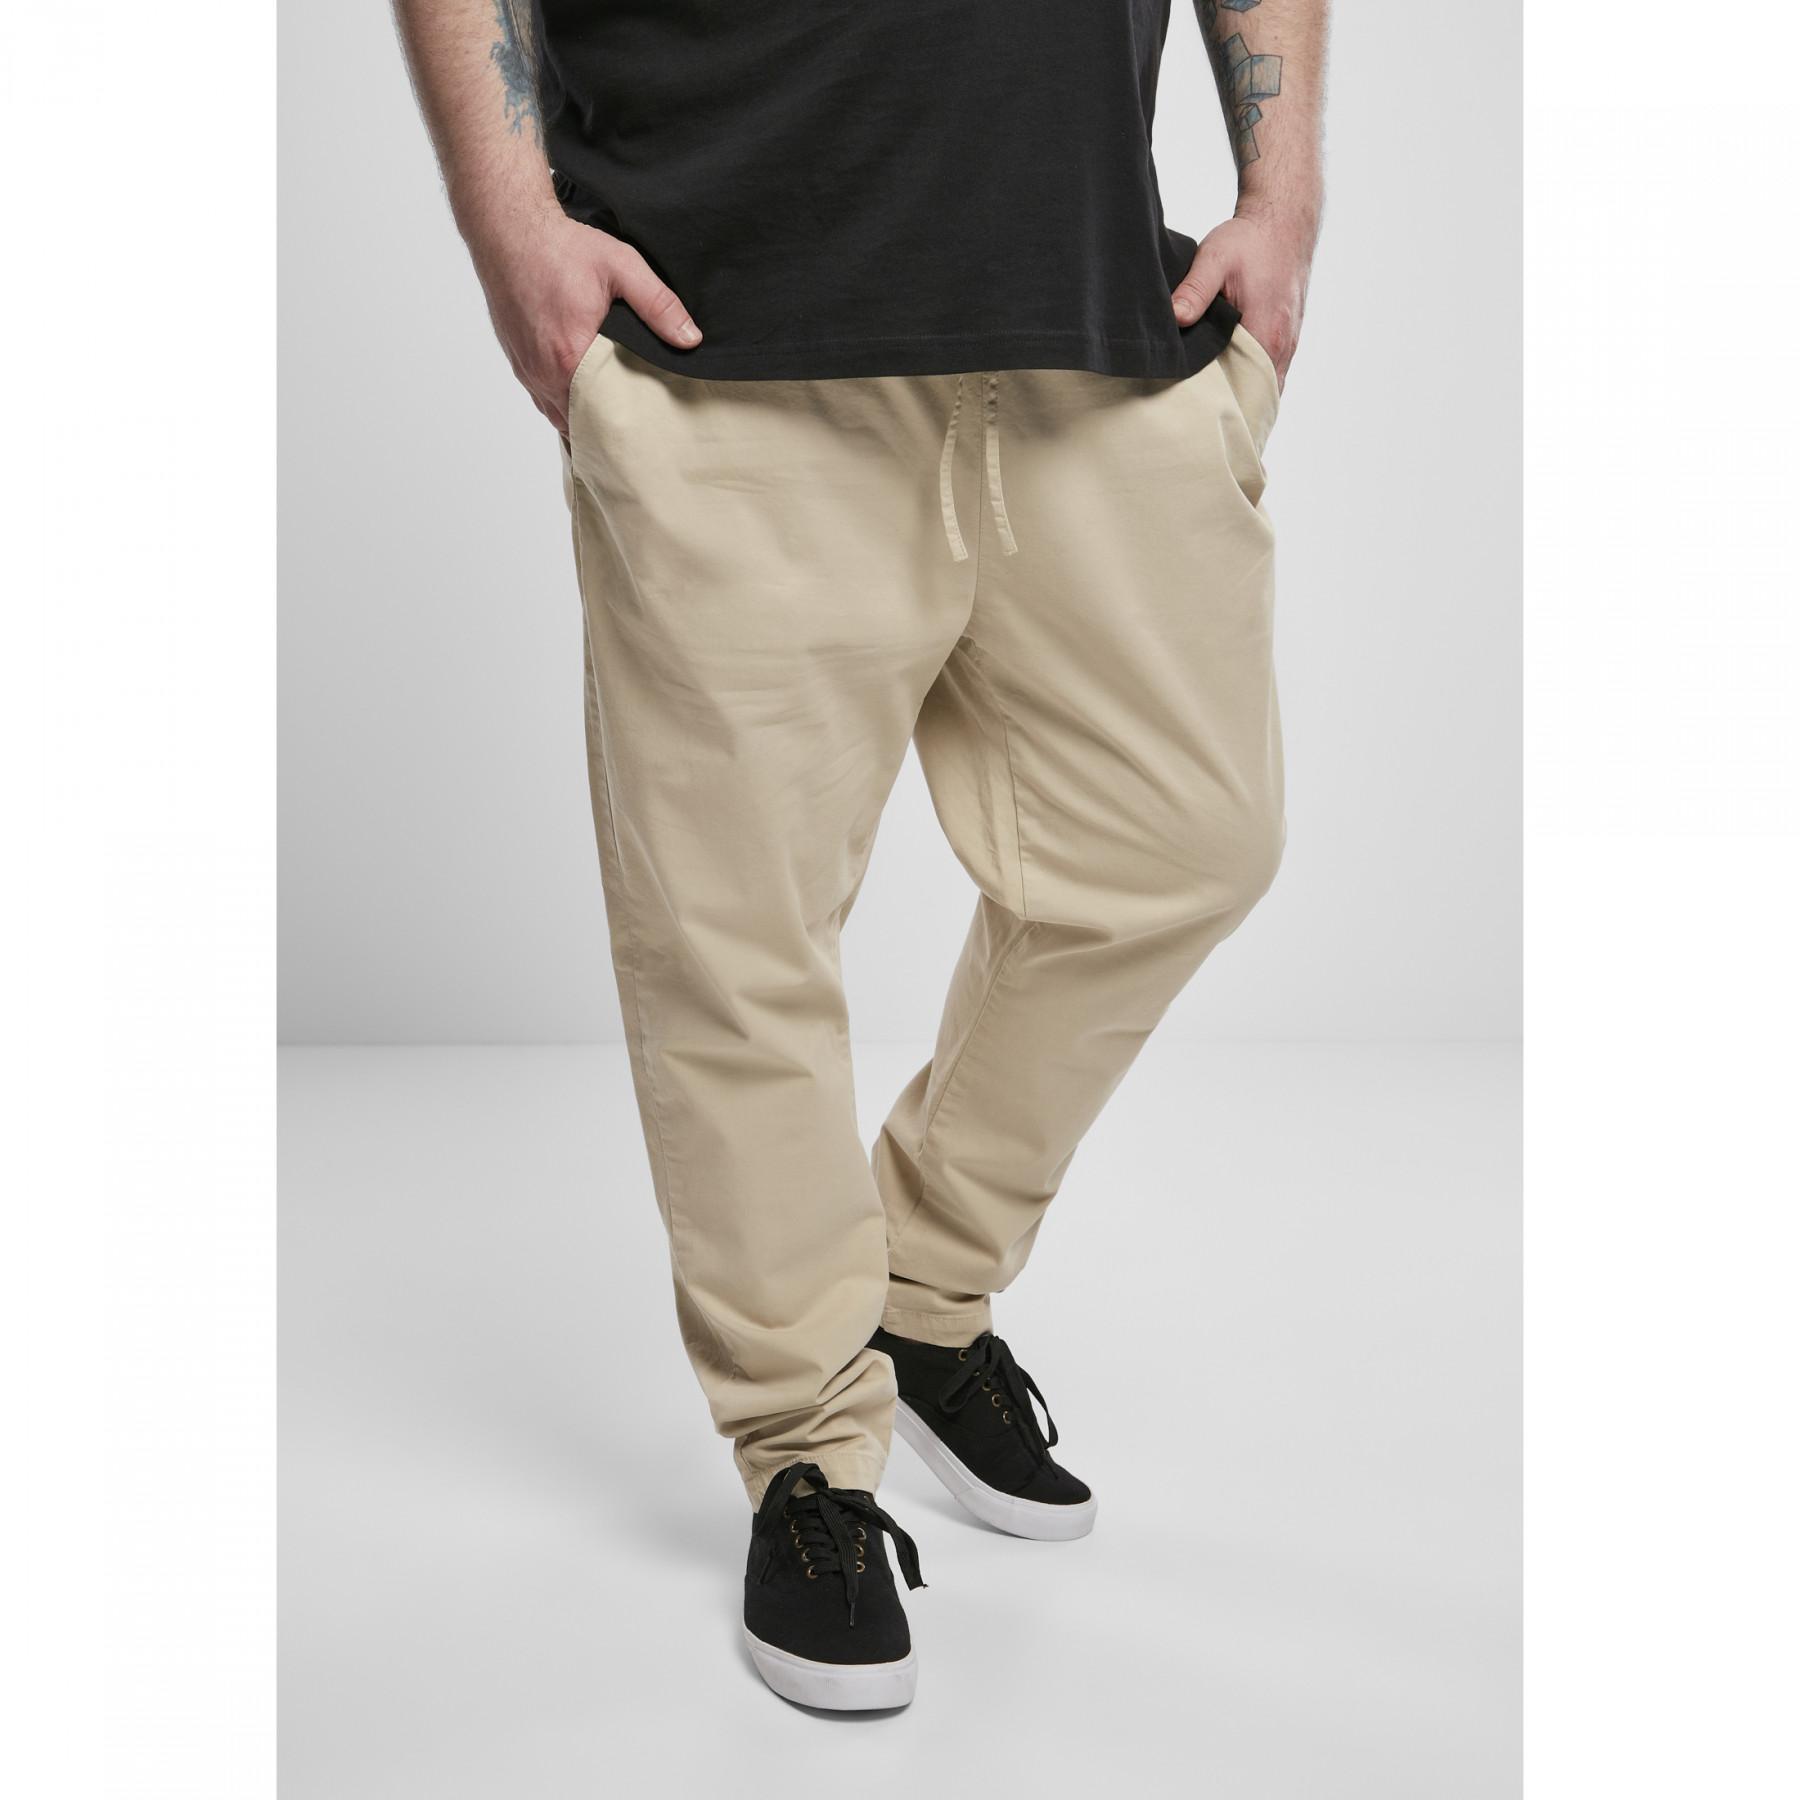 Pantalones Urban Classics tapered cotton jogger (grandes tailles)